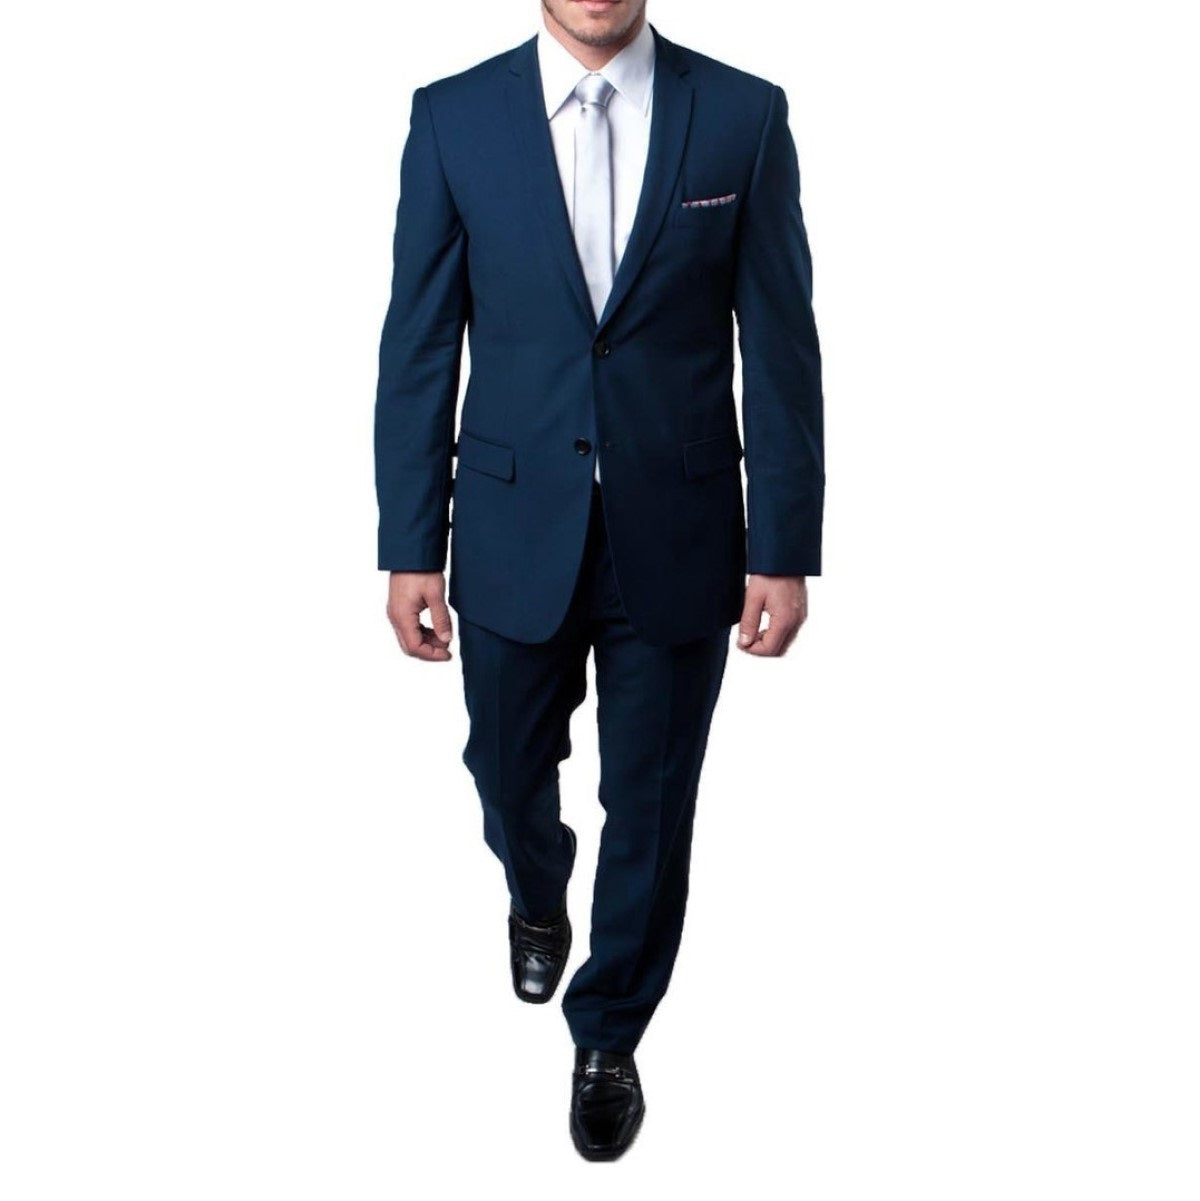 Traje Formal para Hombre TA-M085S-10 Indigo - Formal Suit for Men